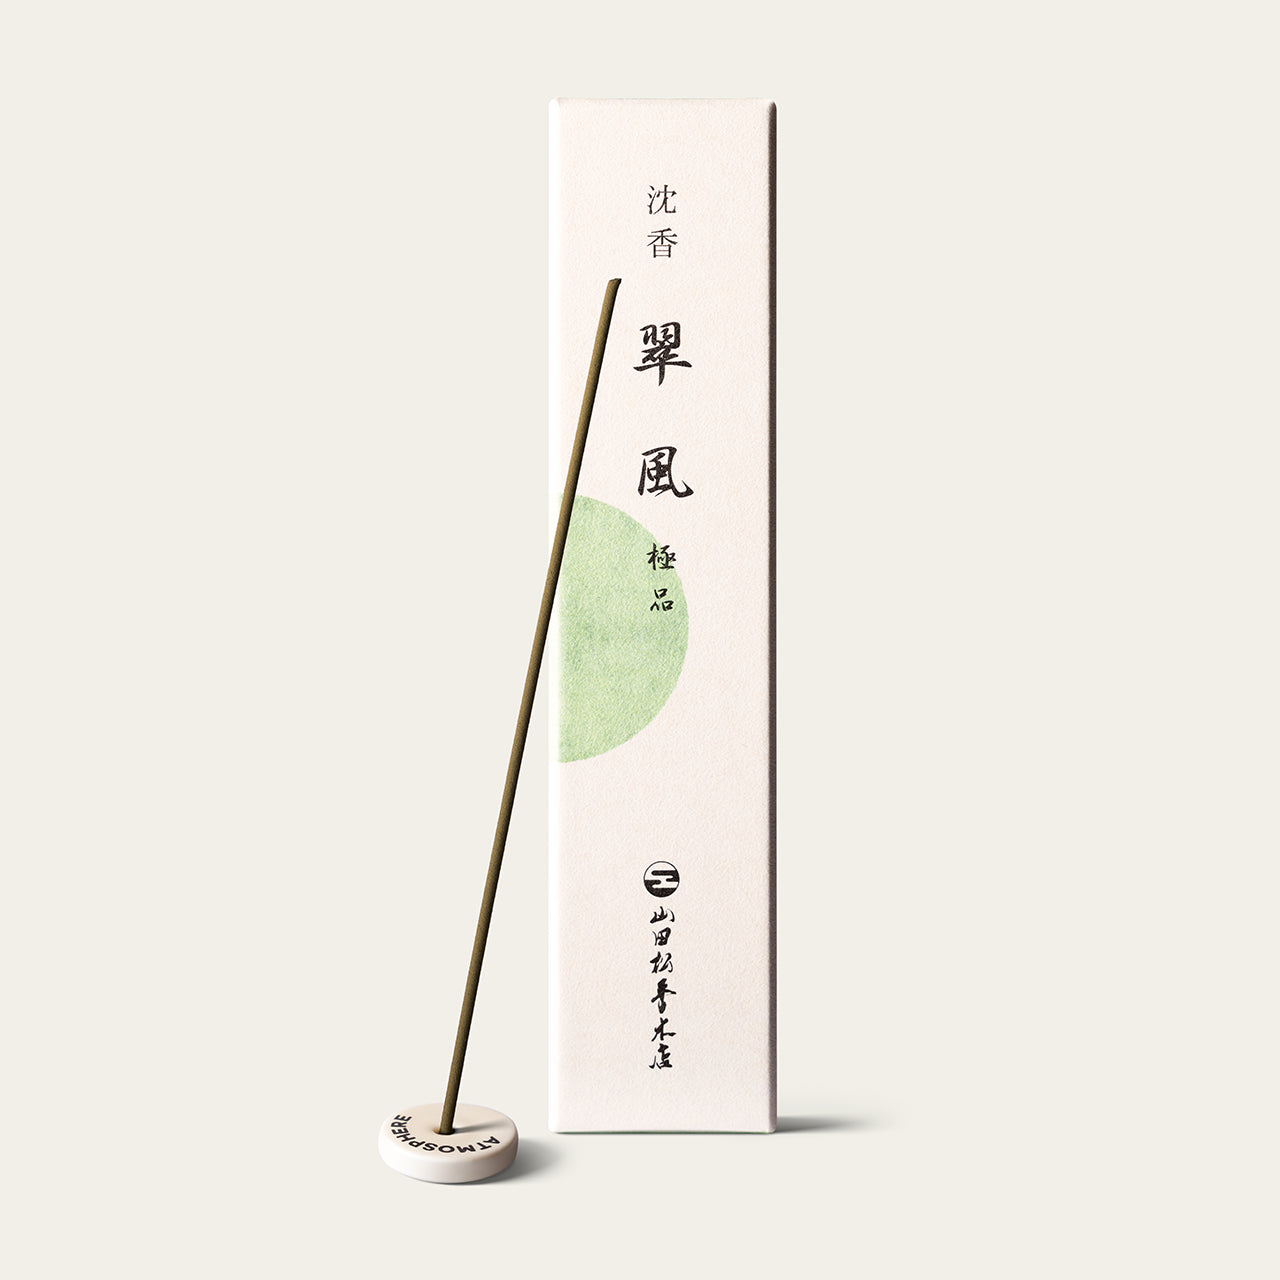 Yamadamatsu Premium Green Gust Supreme Suifu Gokuhin Japanese incense sticks (75 sticks) with Atmosphere ceramic incense holder